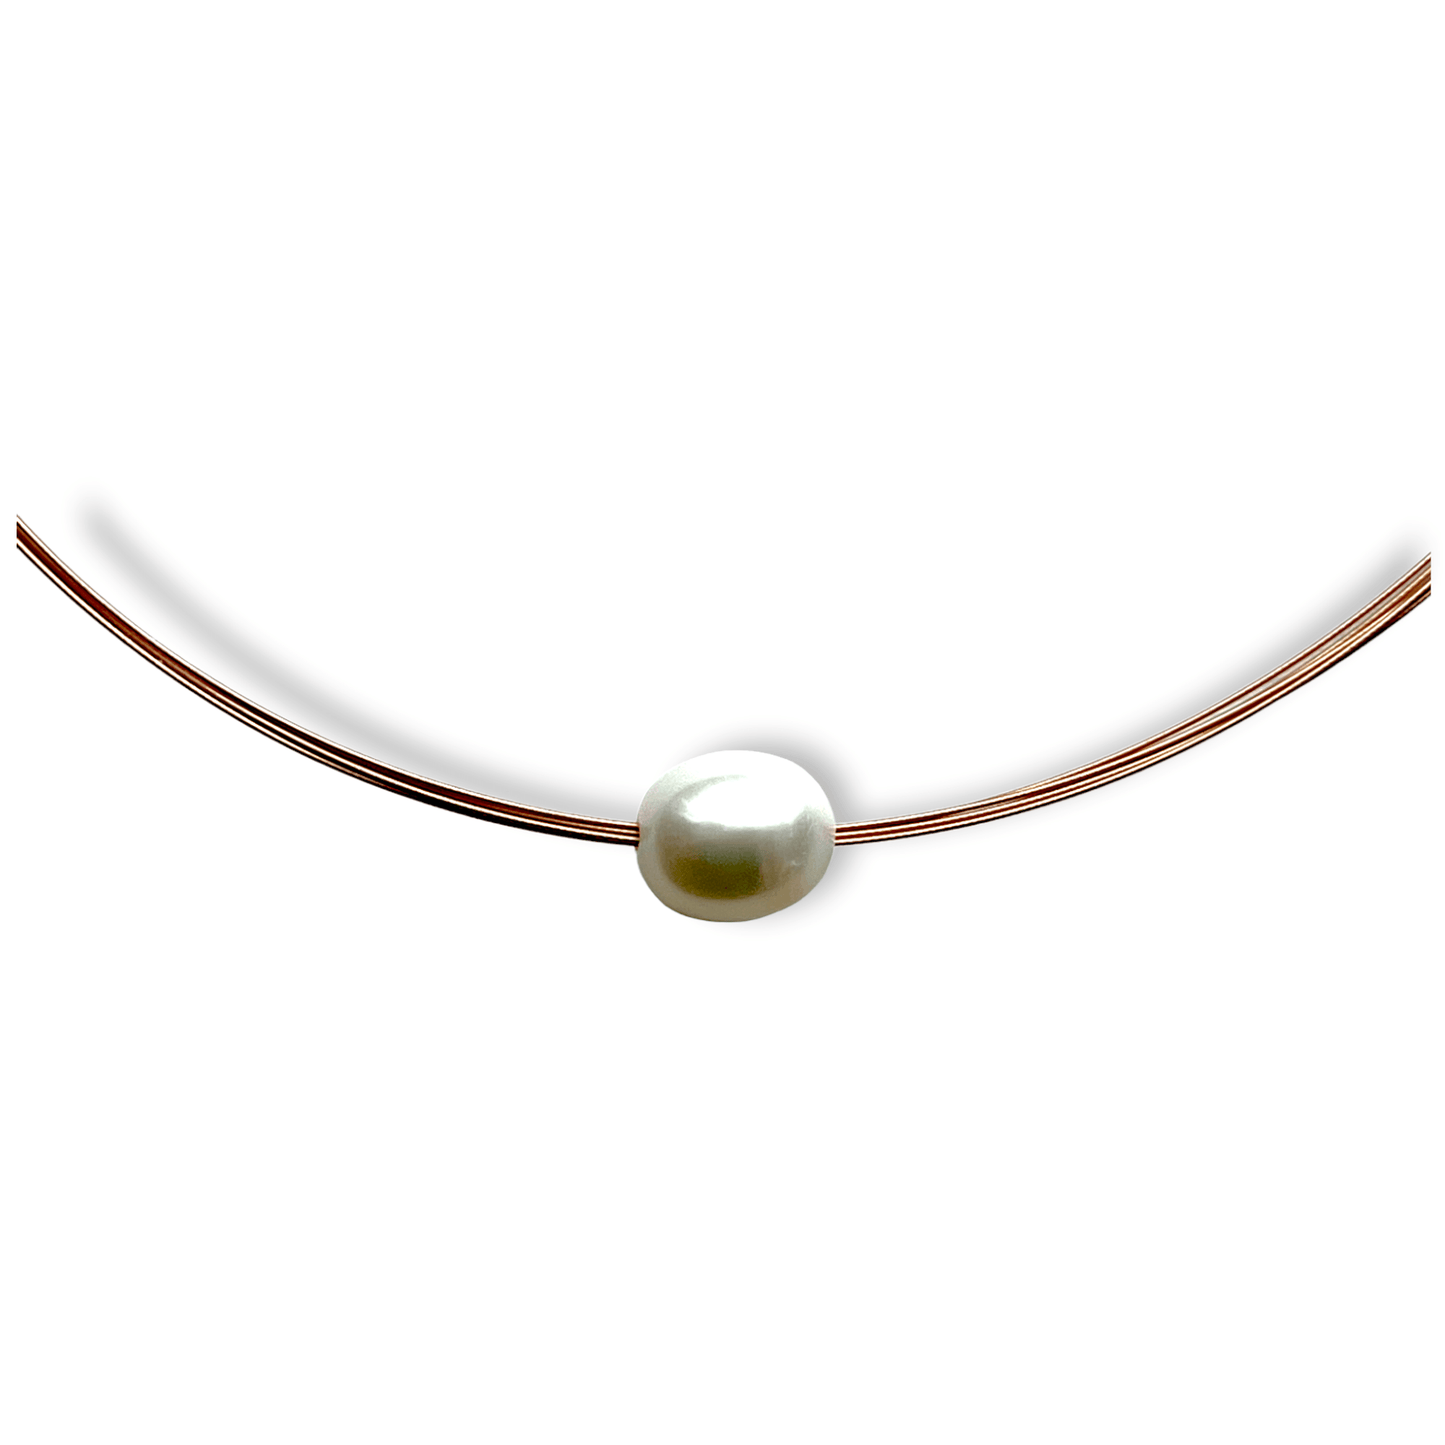 Steel and pearl choker necklaceSundara Joon